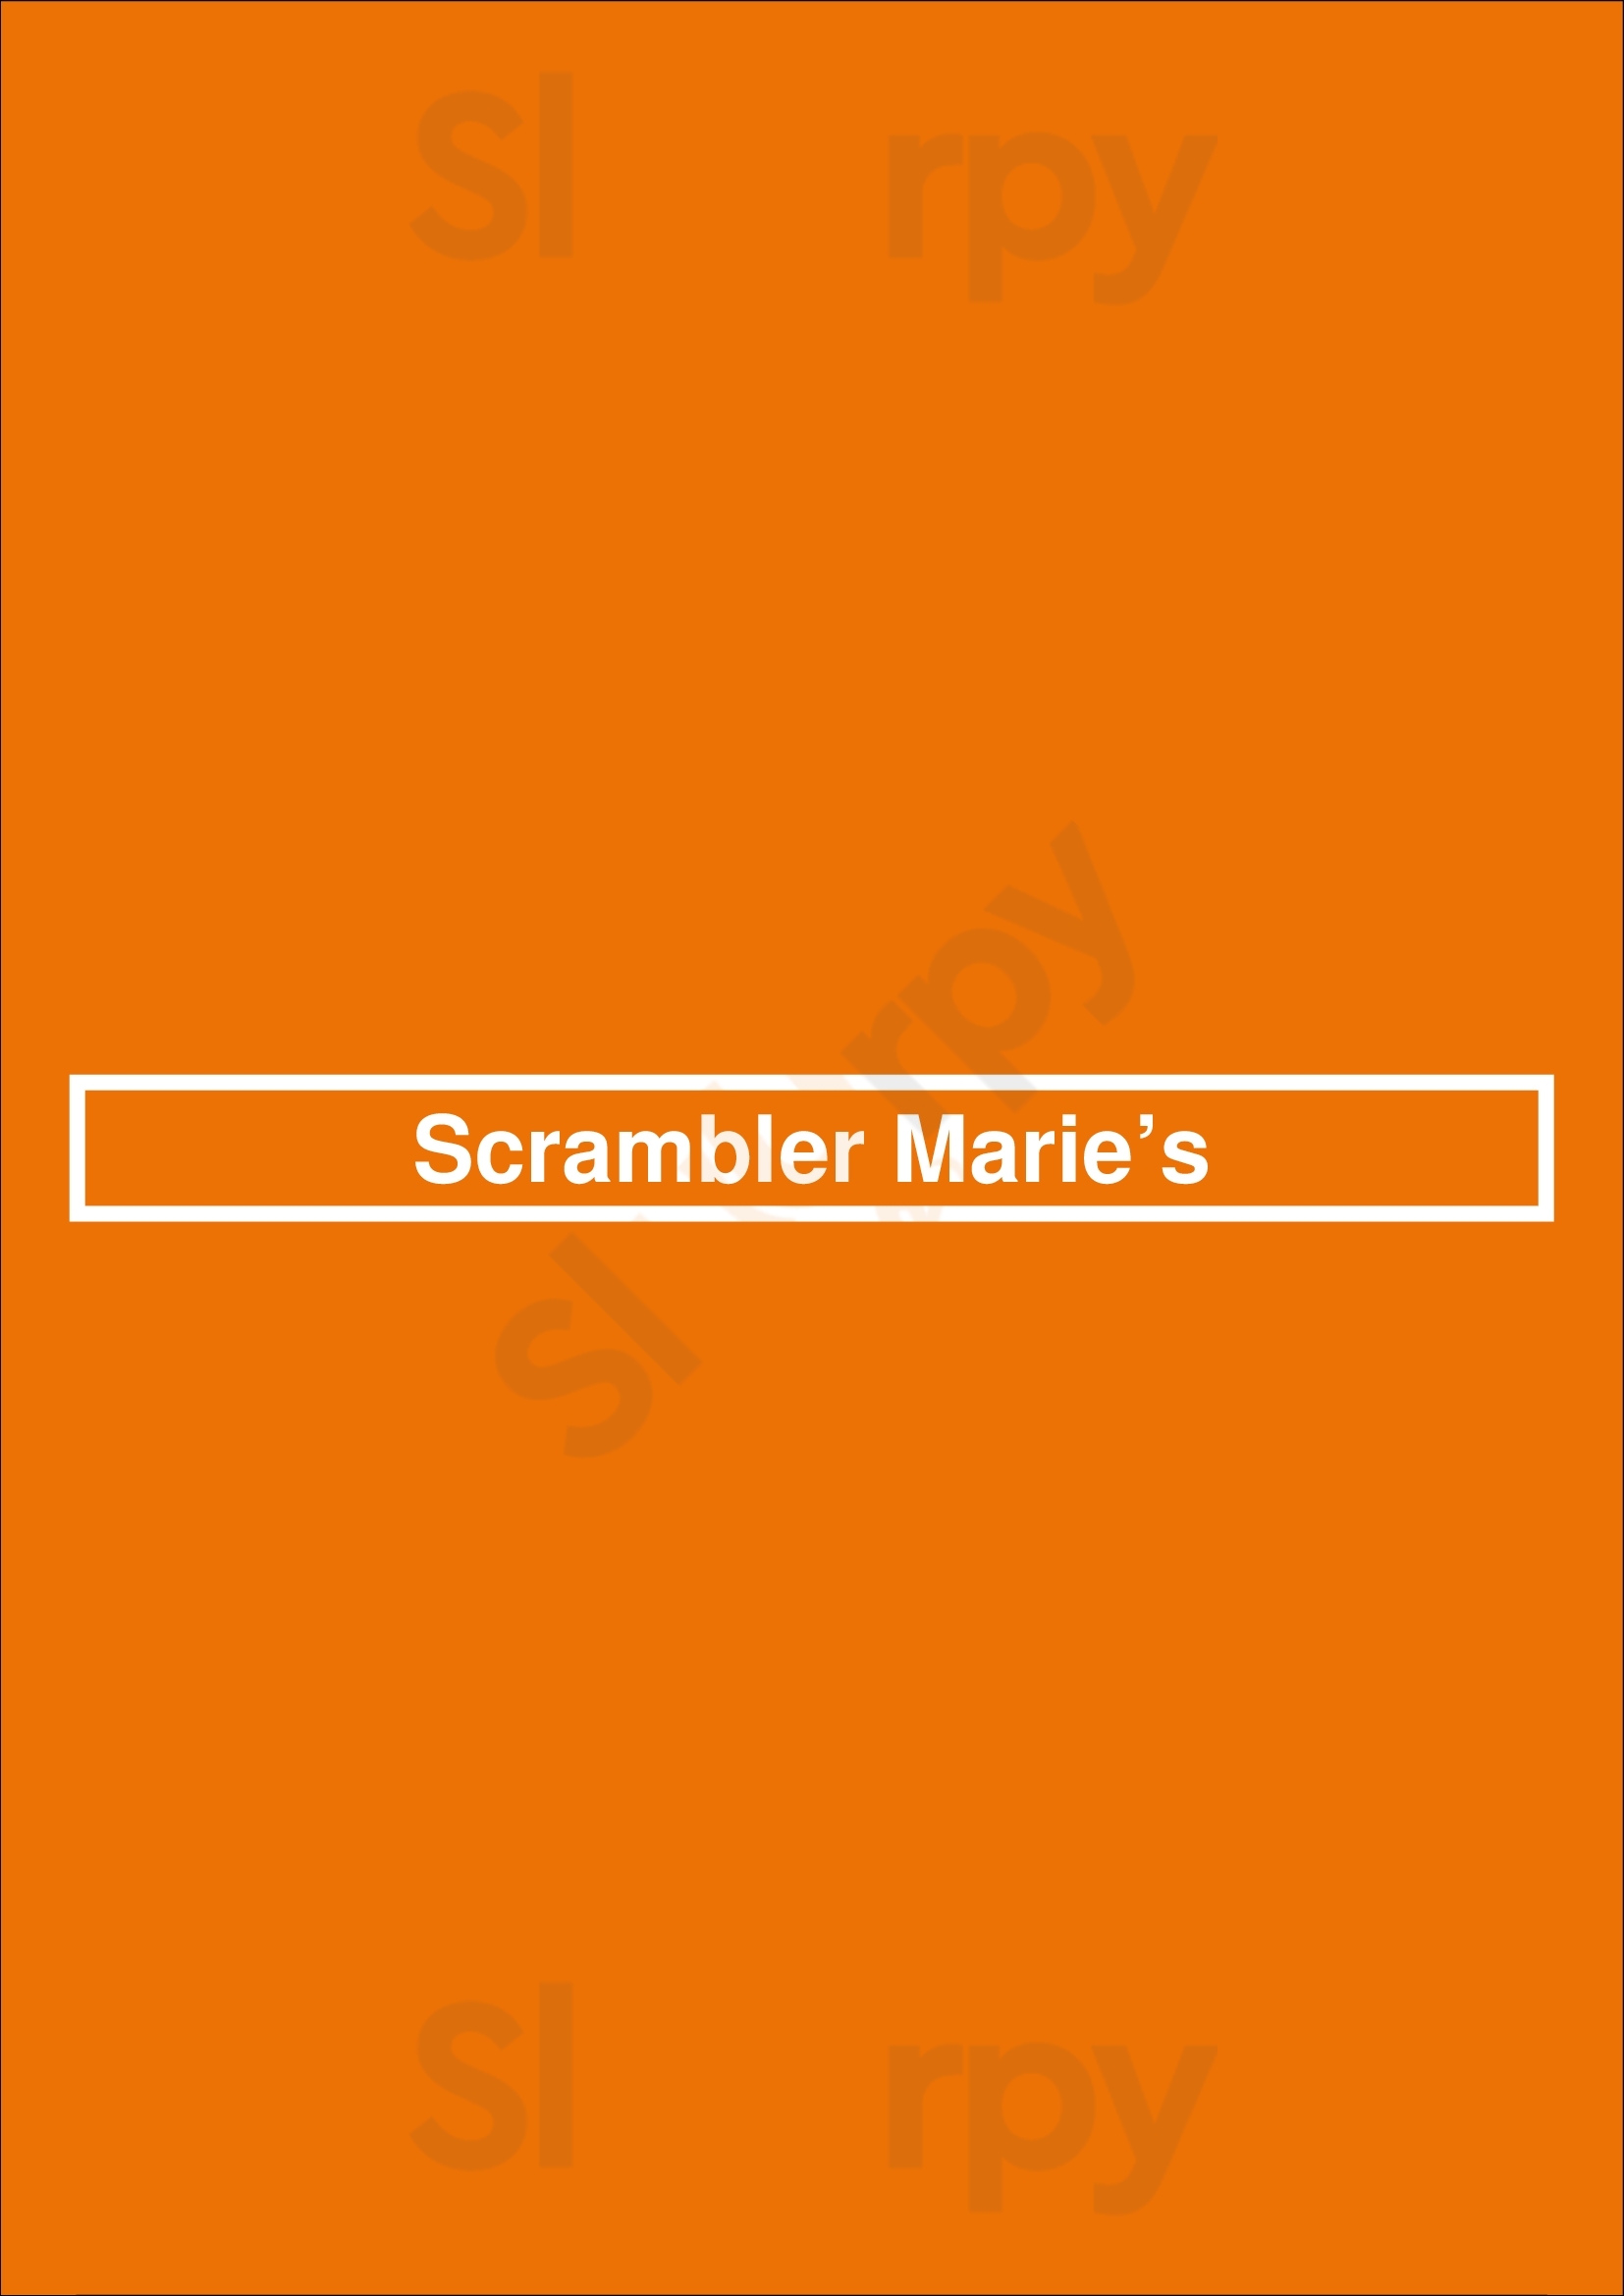 Scrambler Marie’s Columbus Menu - 1